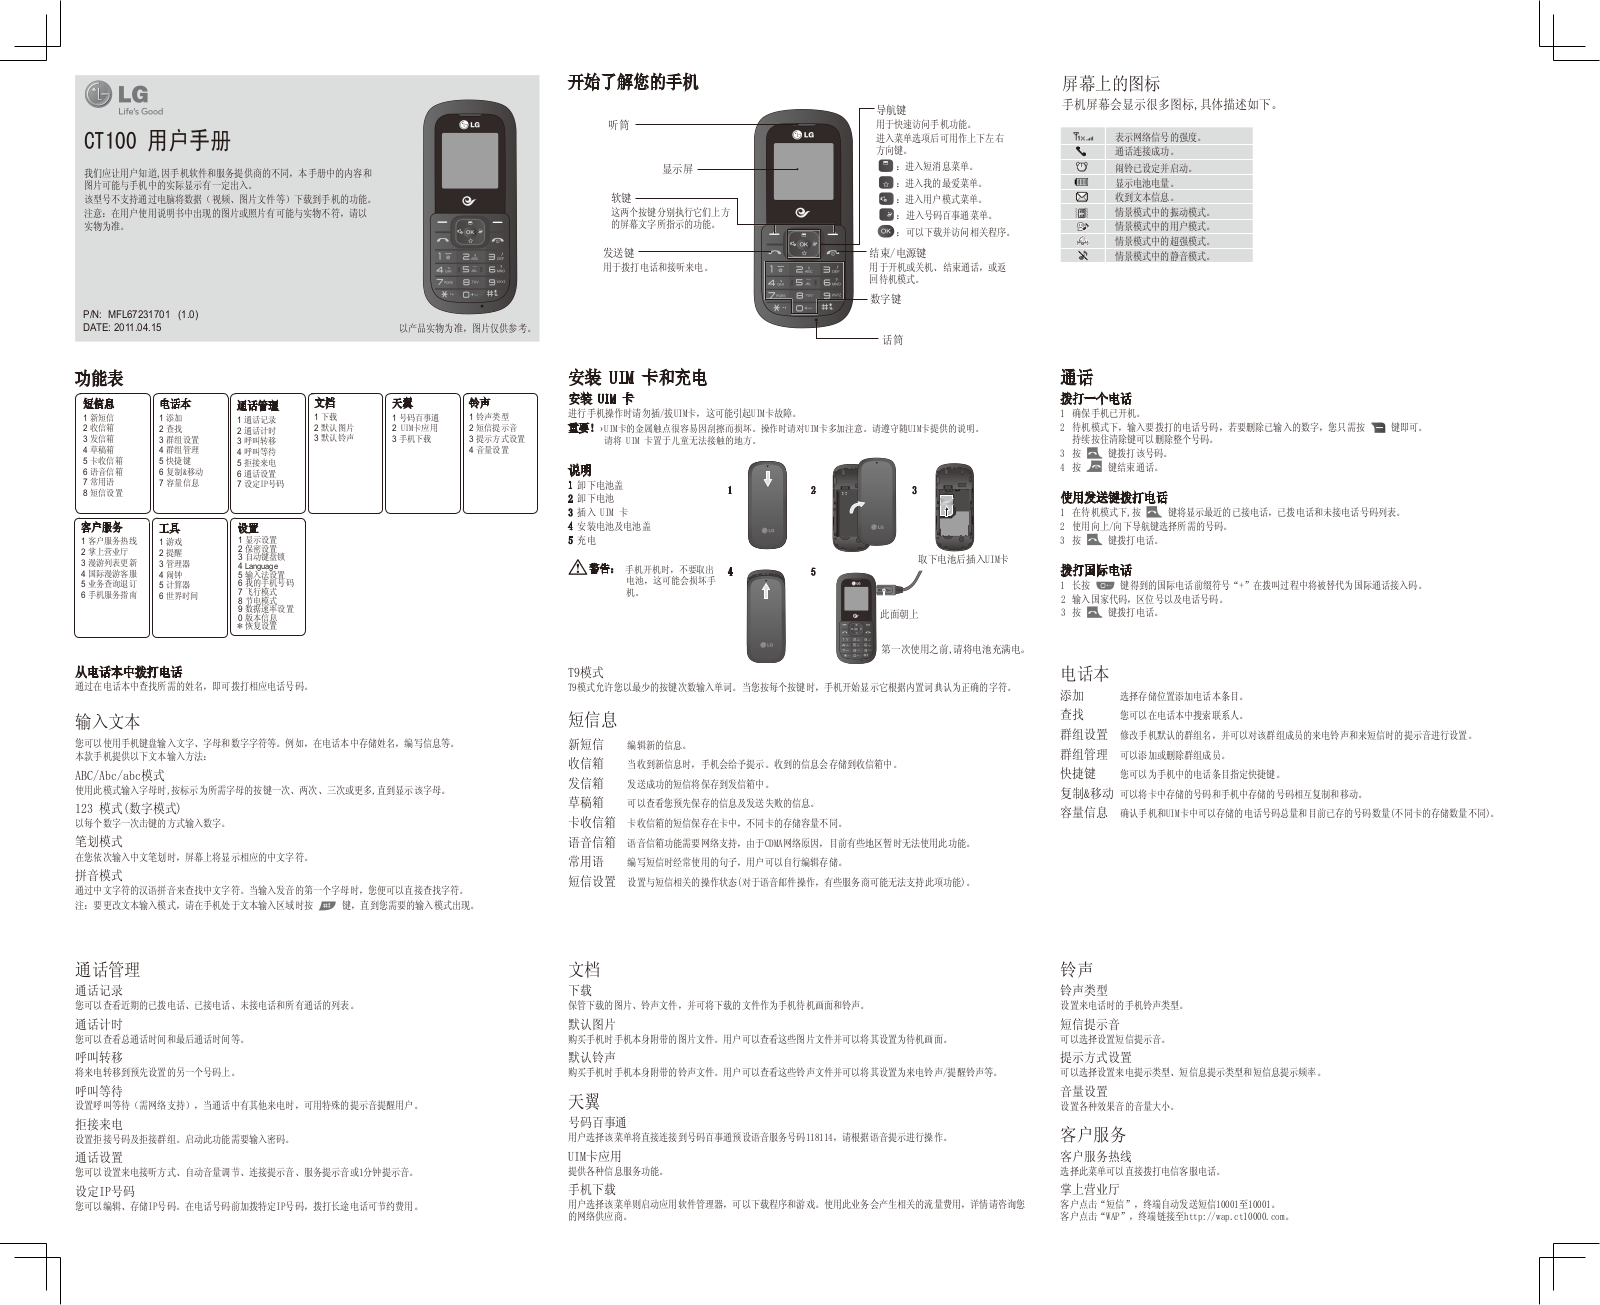 LG CT100 User Guide